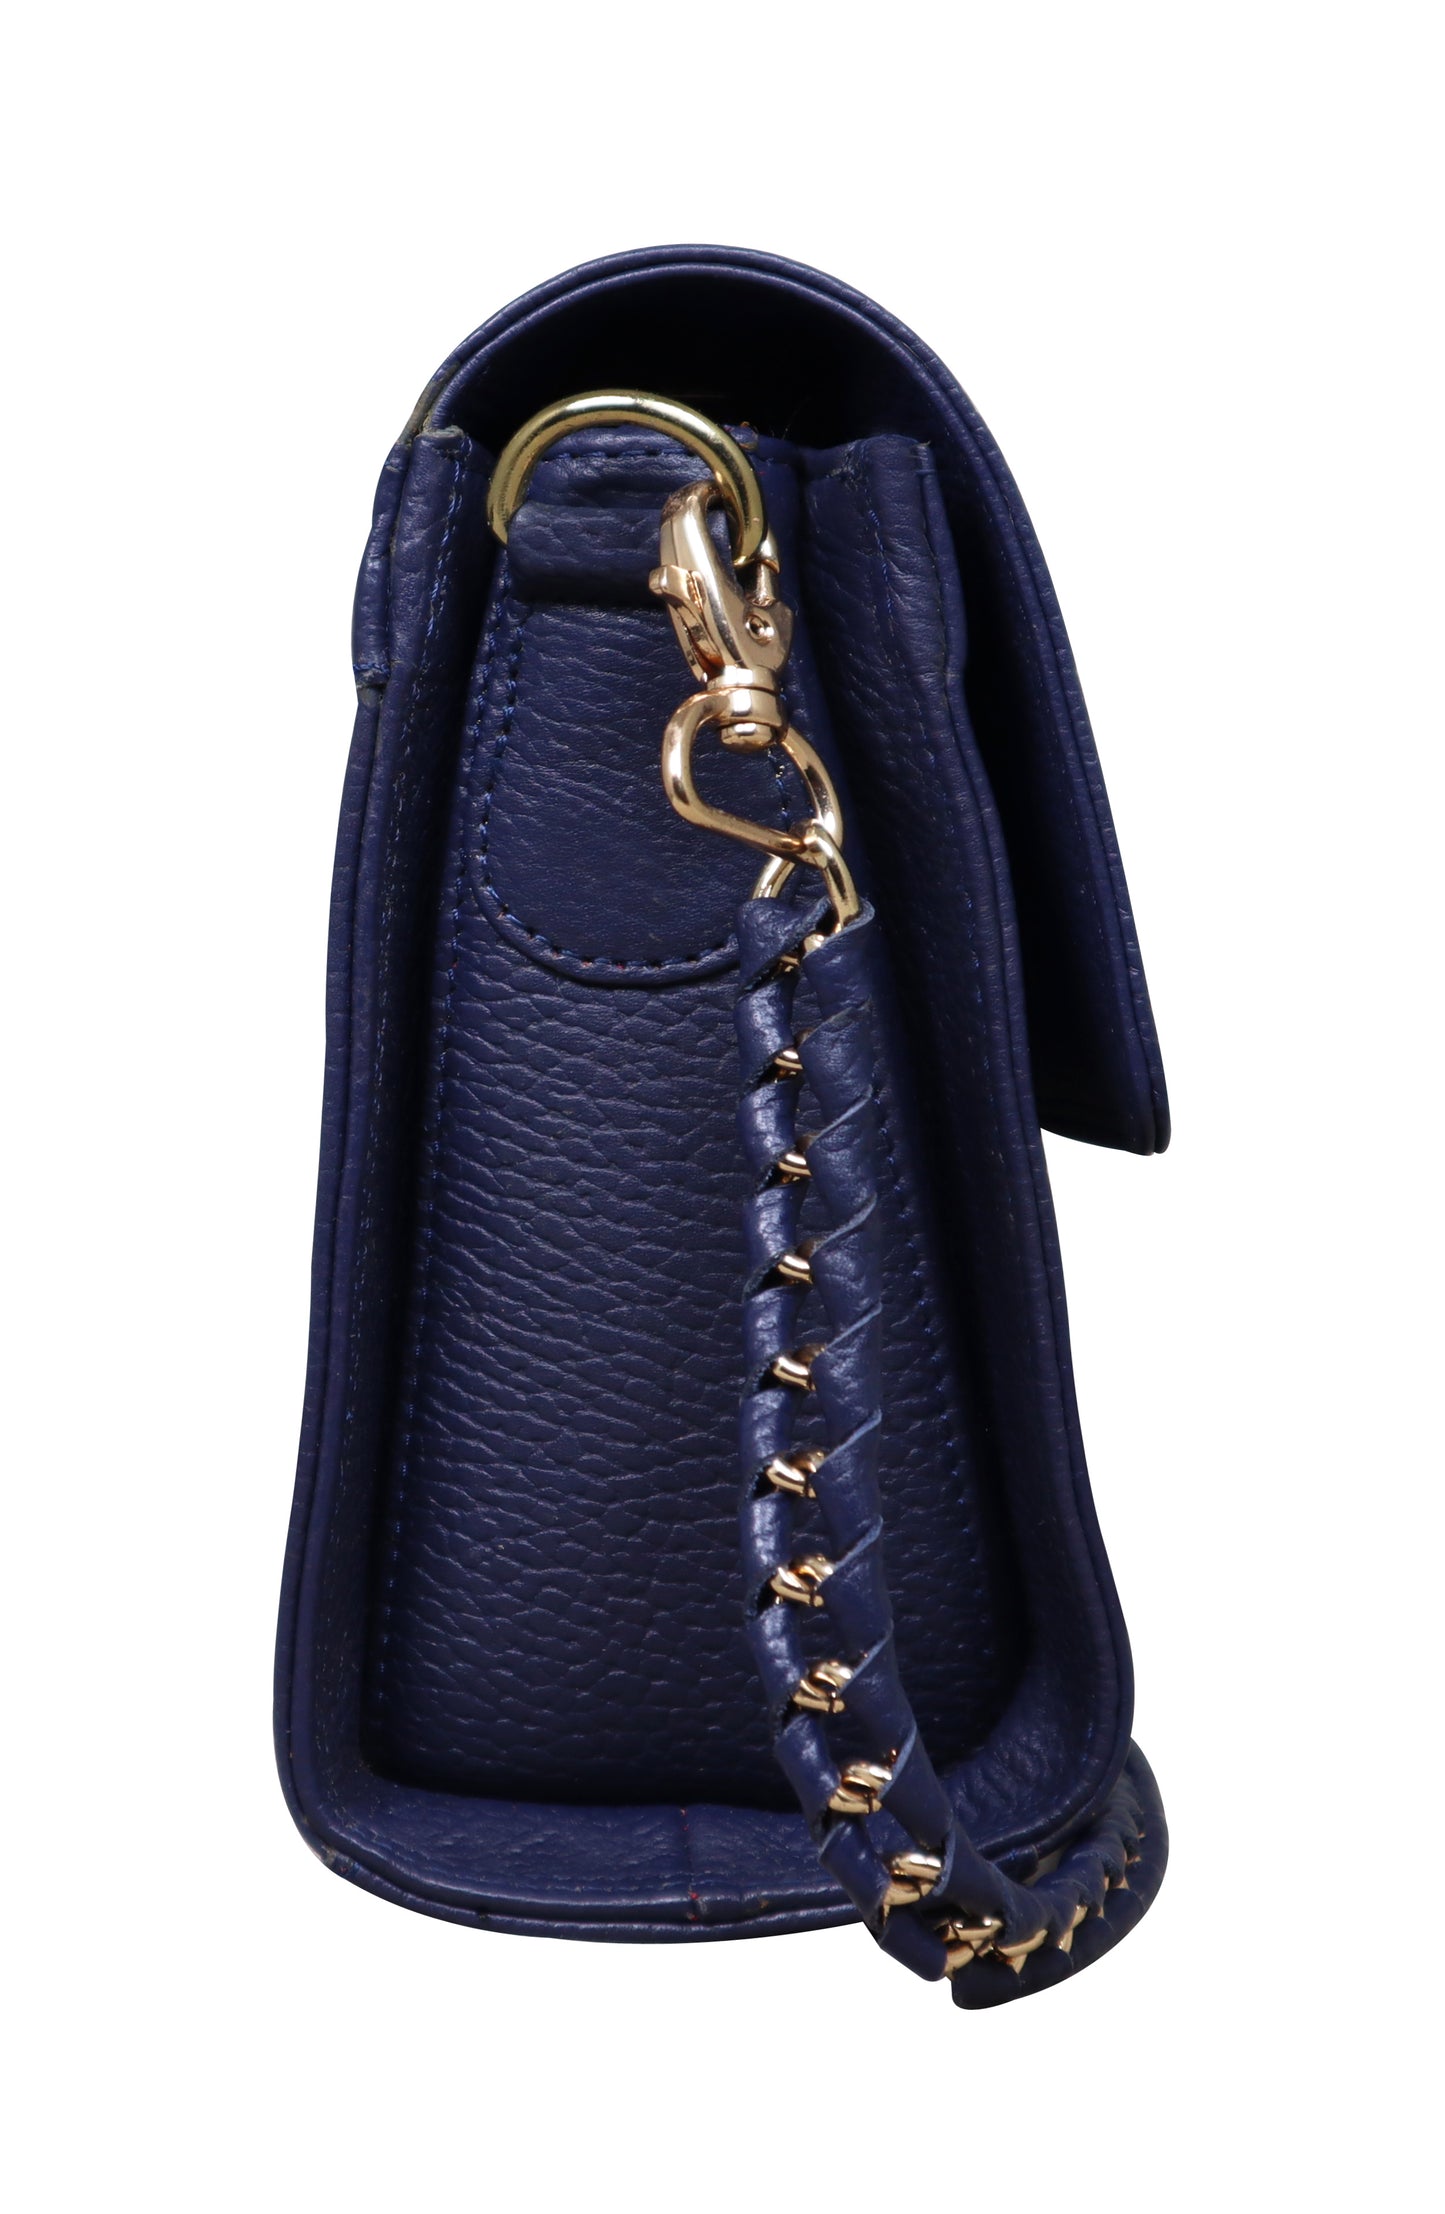 Calfnero Genuine Leather Women's Sling Bag (102-Navy)